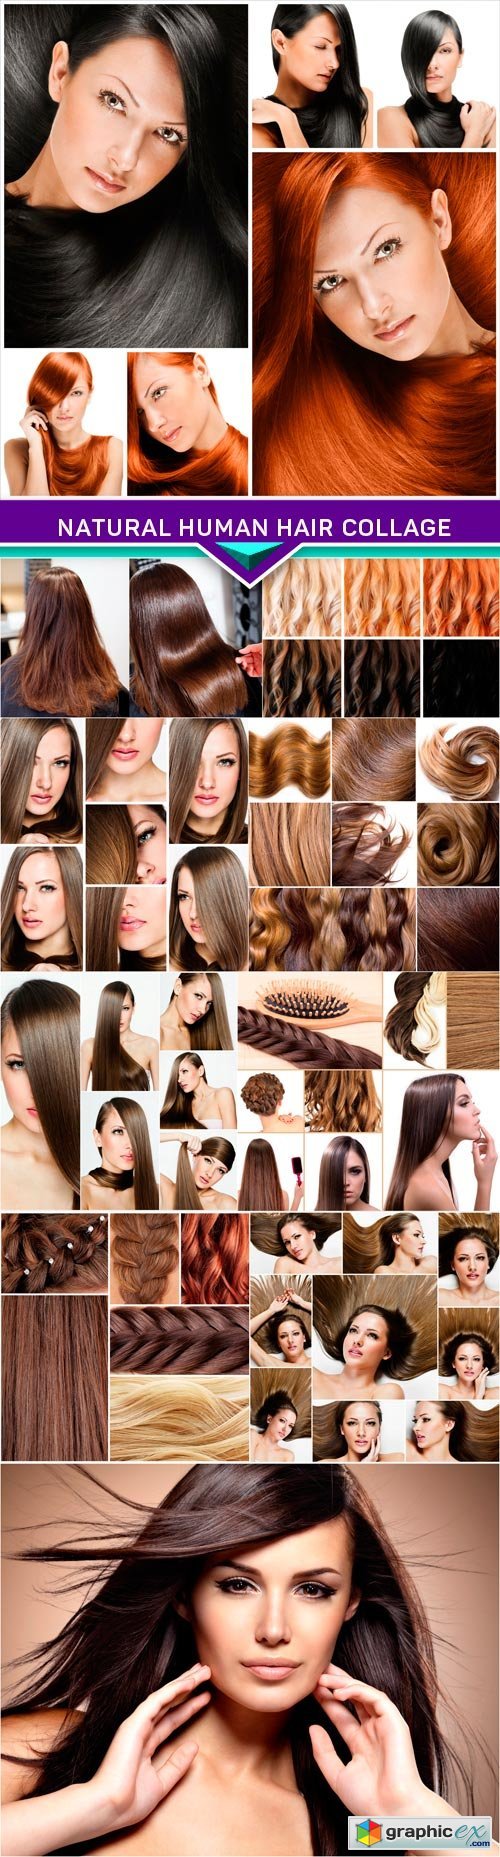 Natural human hair collage 10X JPEG